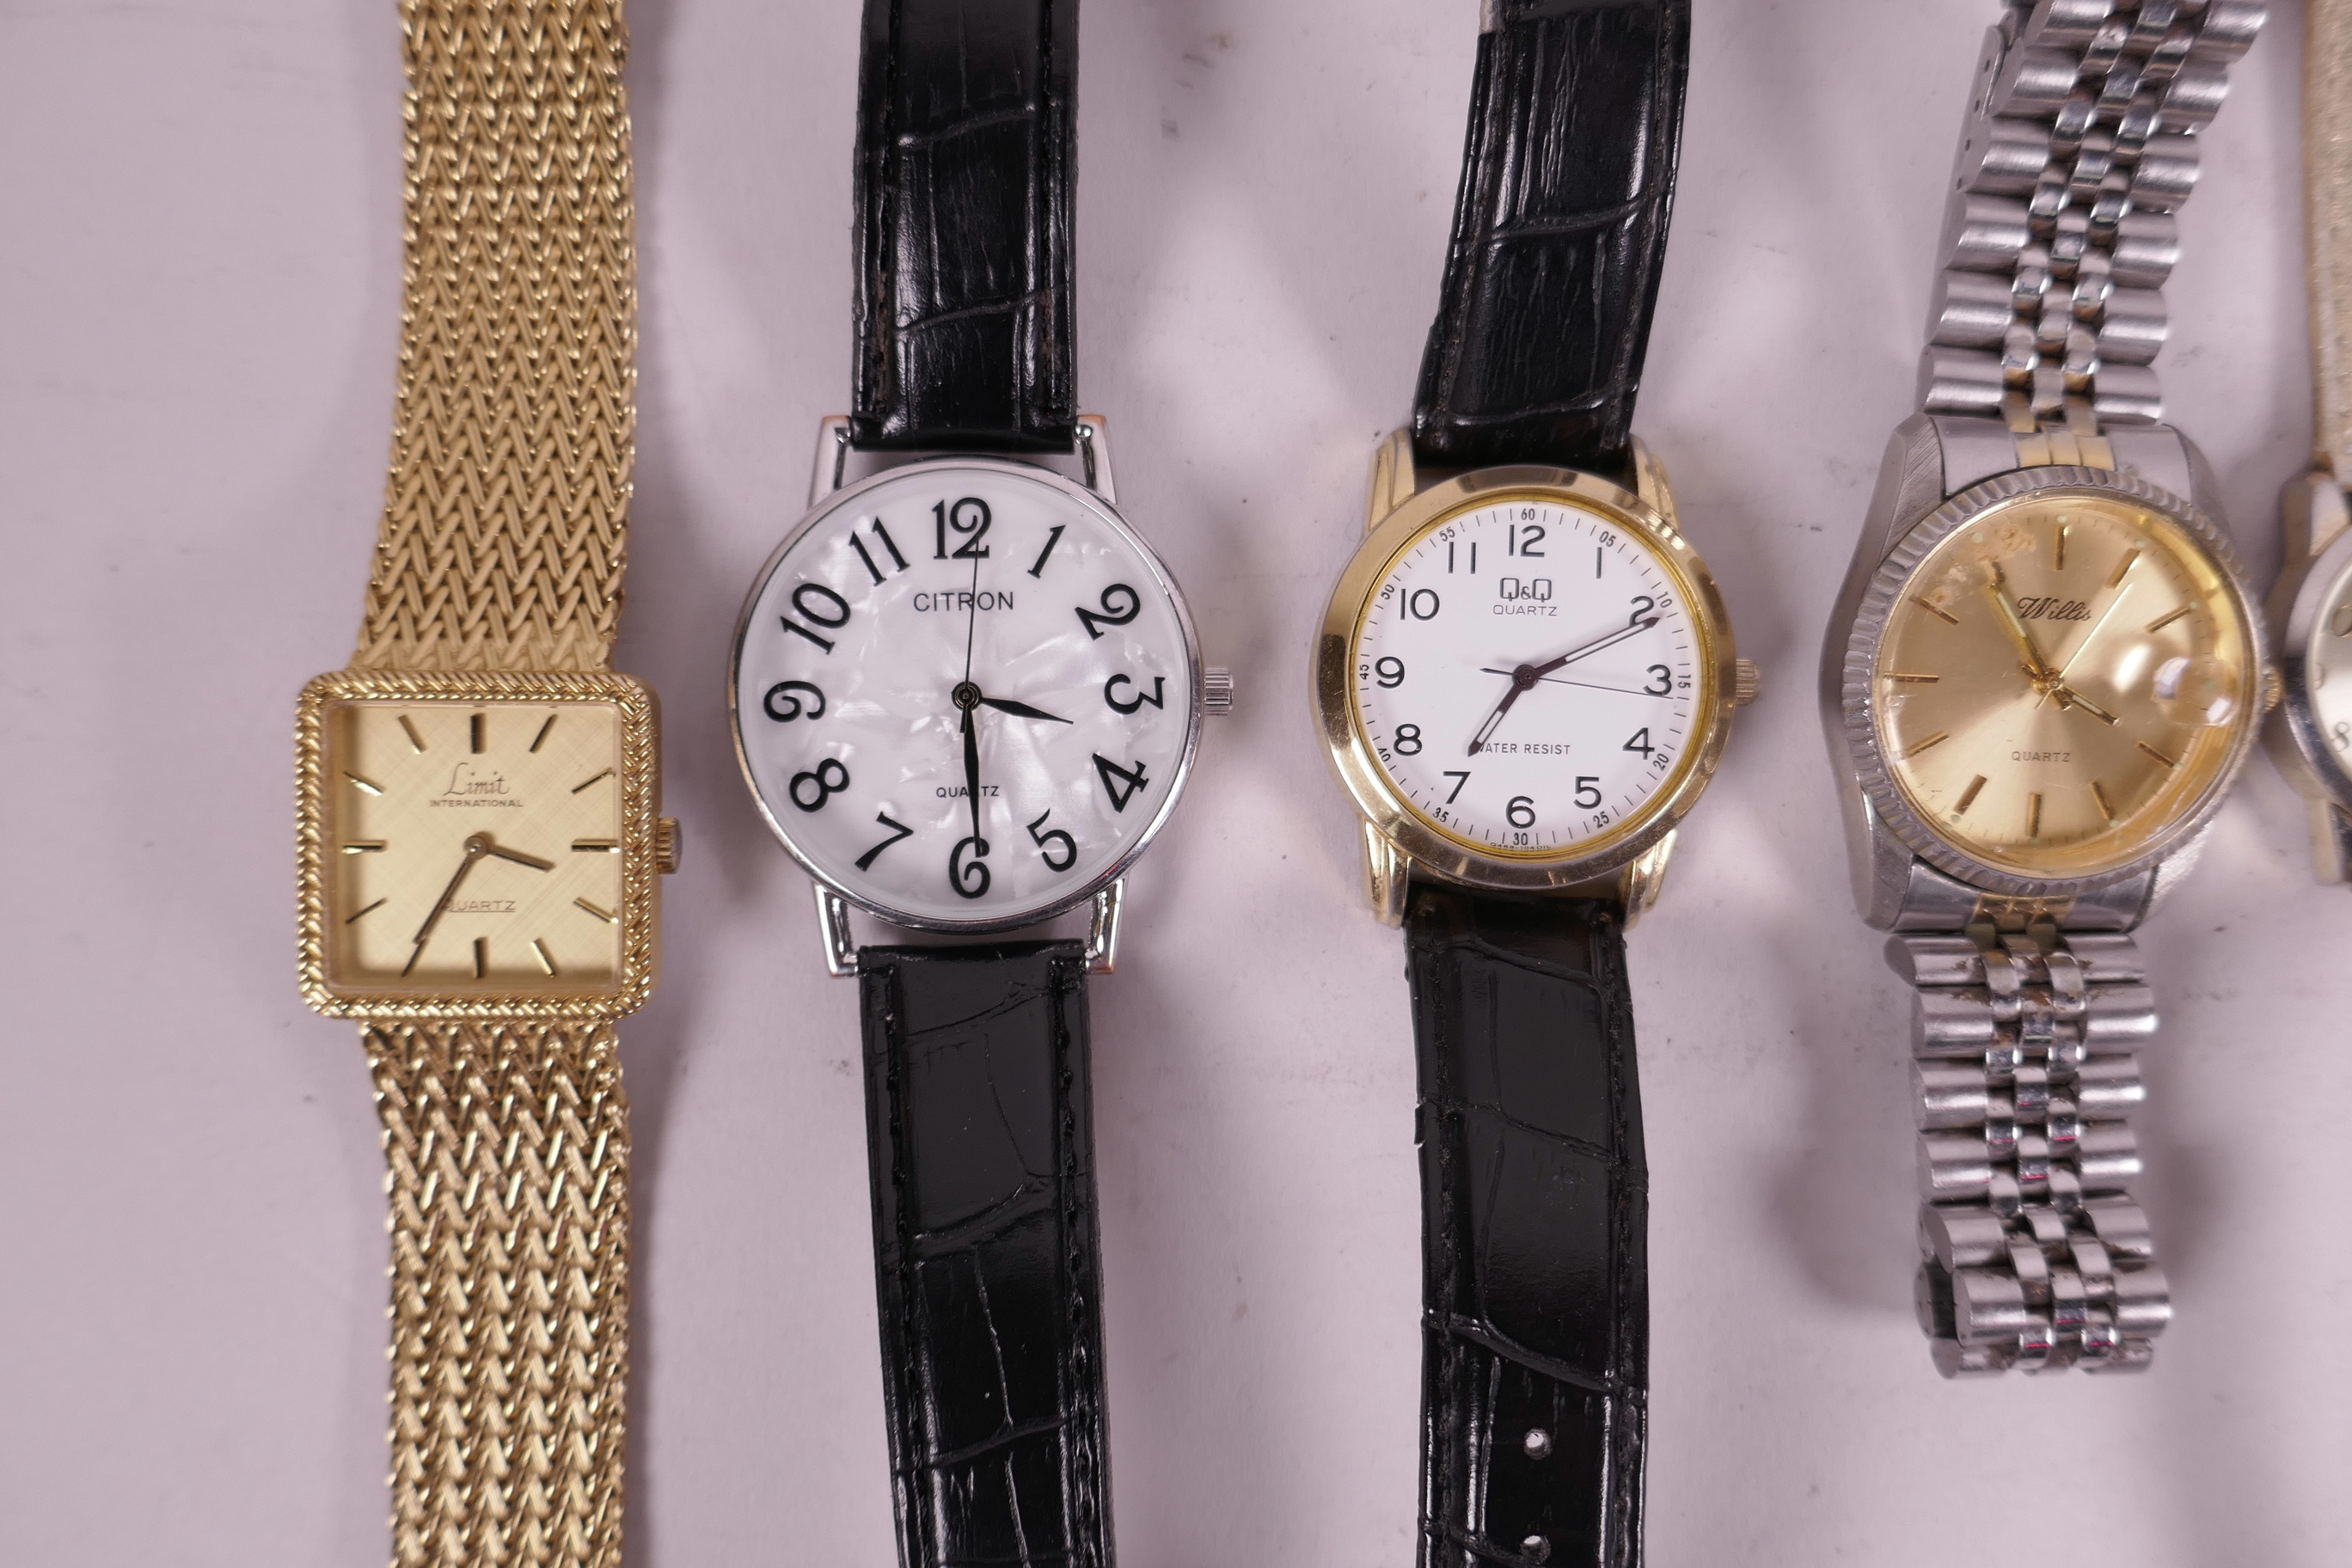 A quantity of ladies' and gentlemen's wristwatches including Casio, Limit, Citron, Terrain, Stegmann - Image 2 of 5